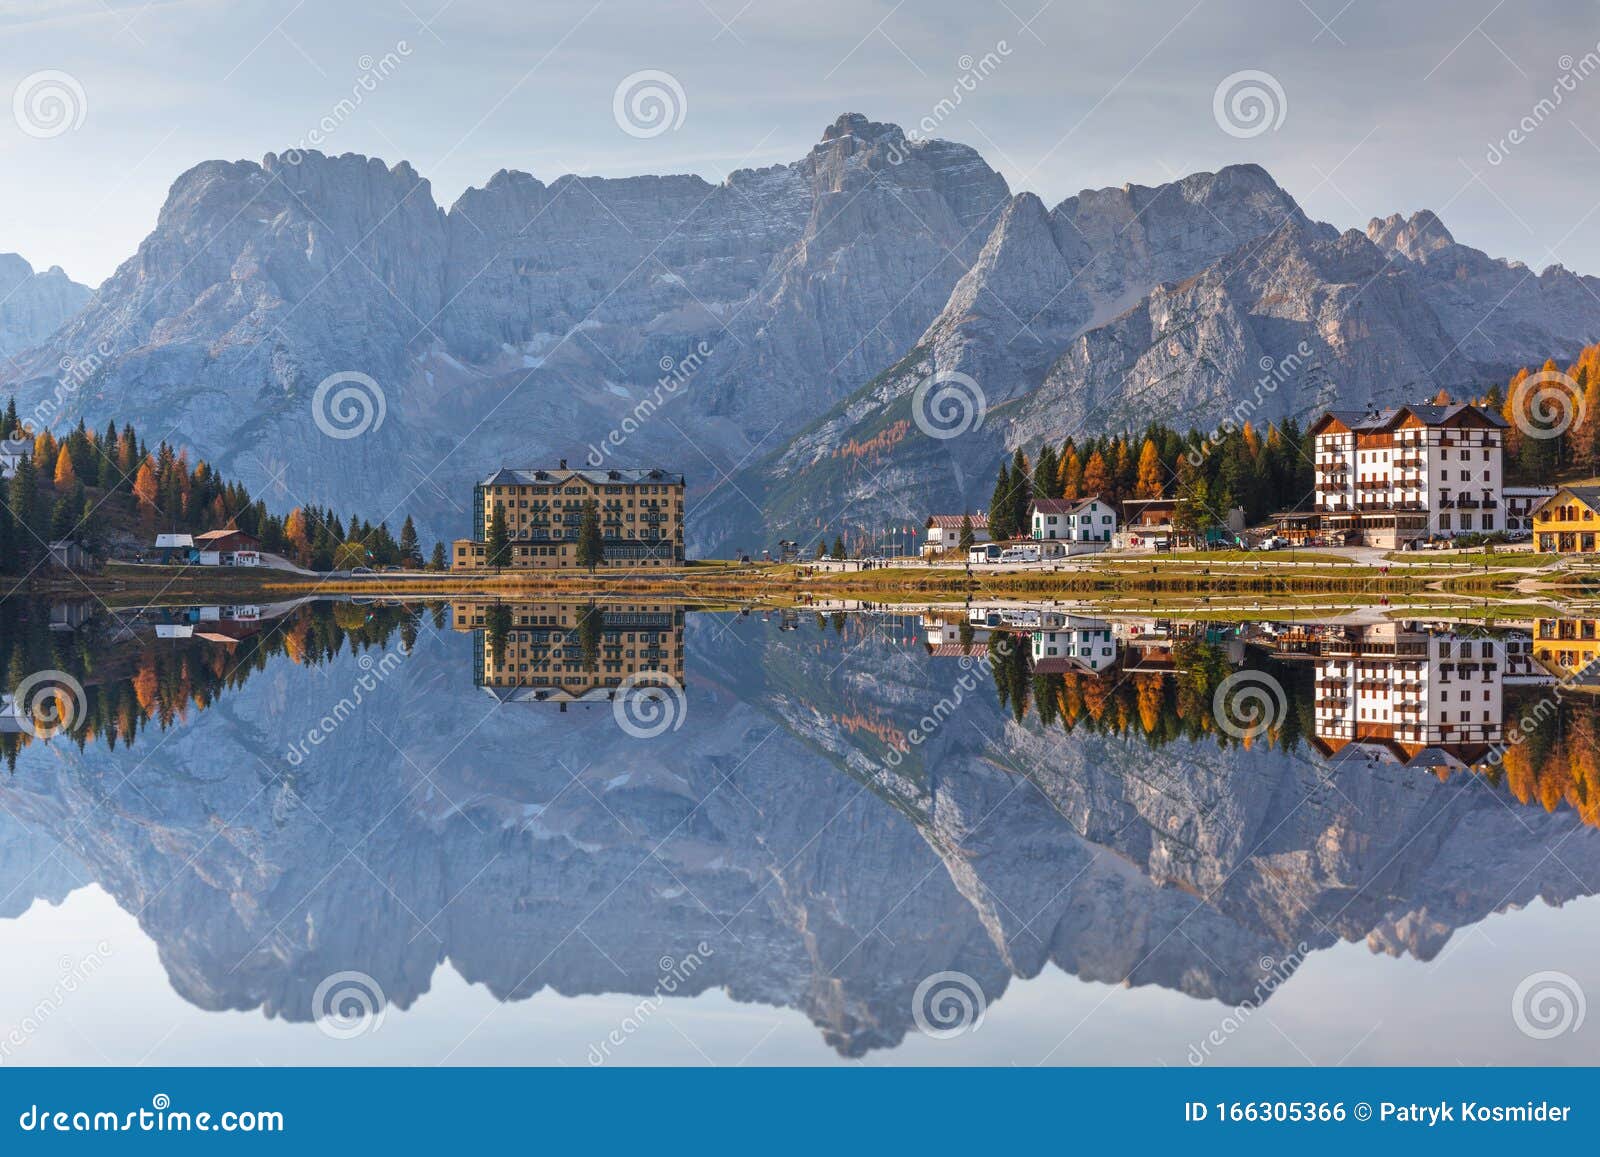 dolomites mountains reflected in the lago mi misurina lake at autumn, south tyrol. italy